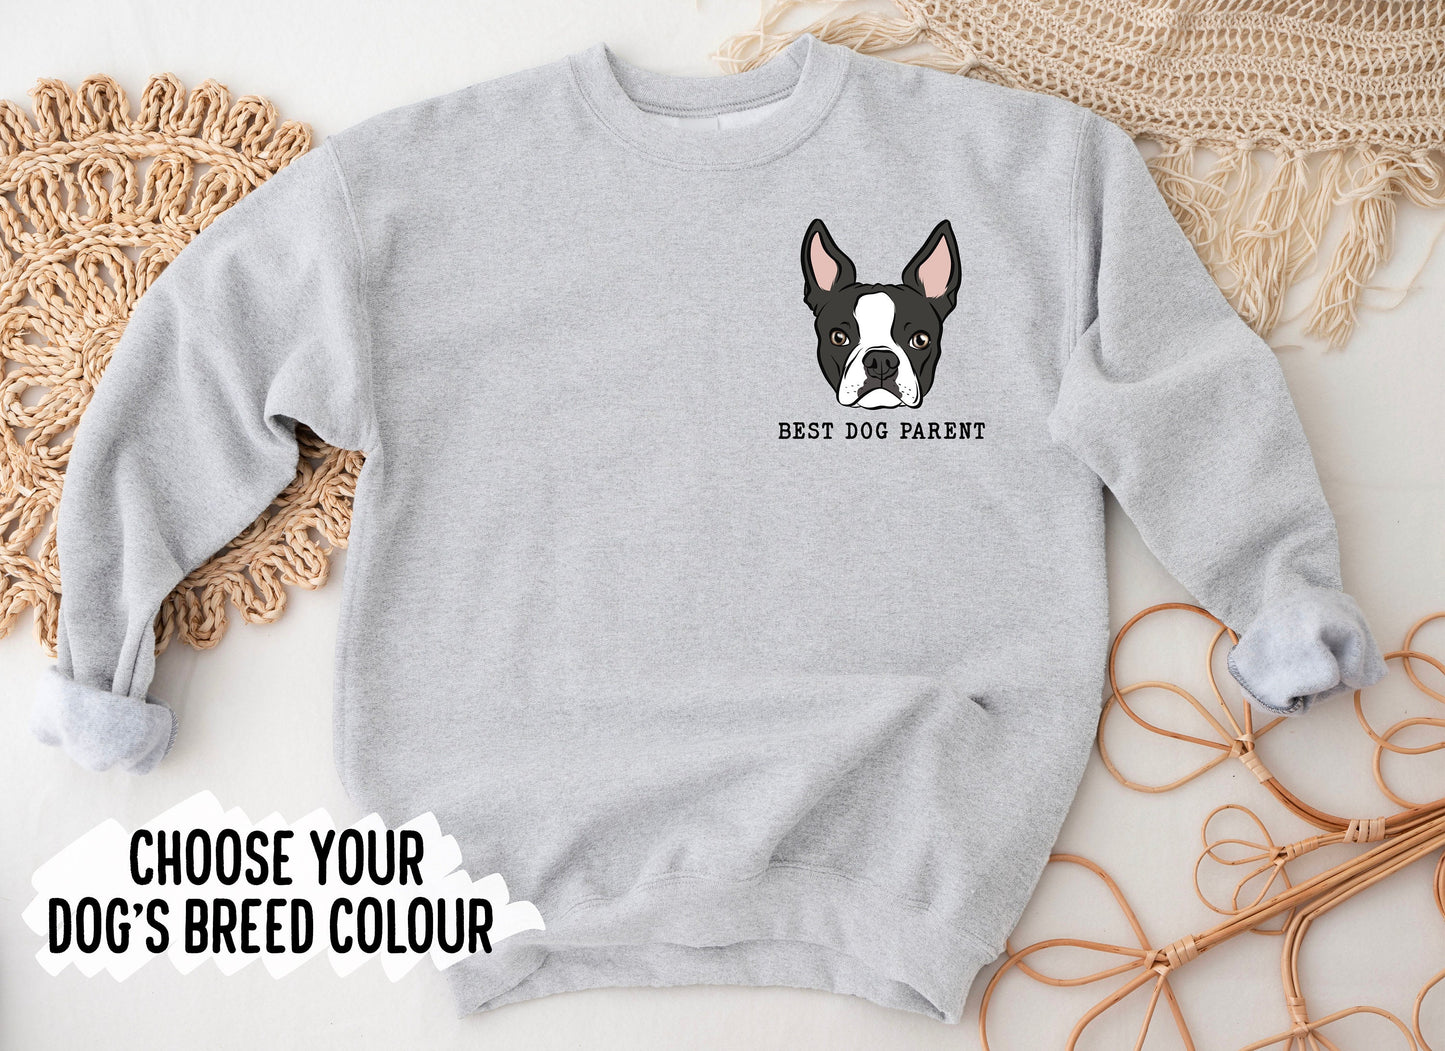 Boston Terrier Sweatshirt